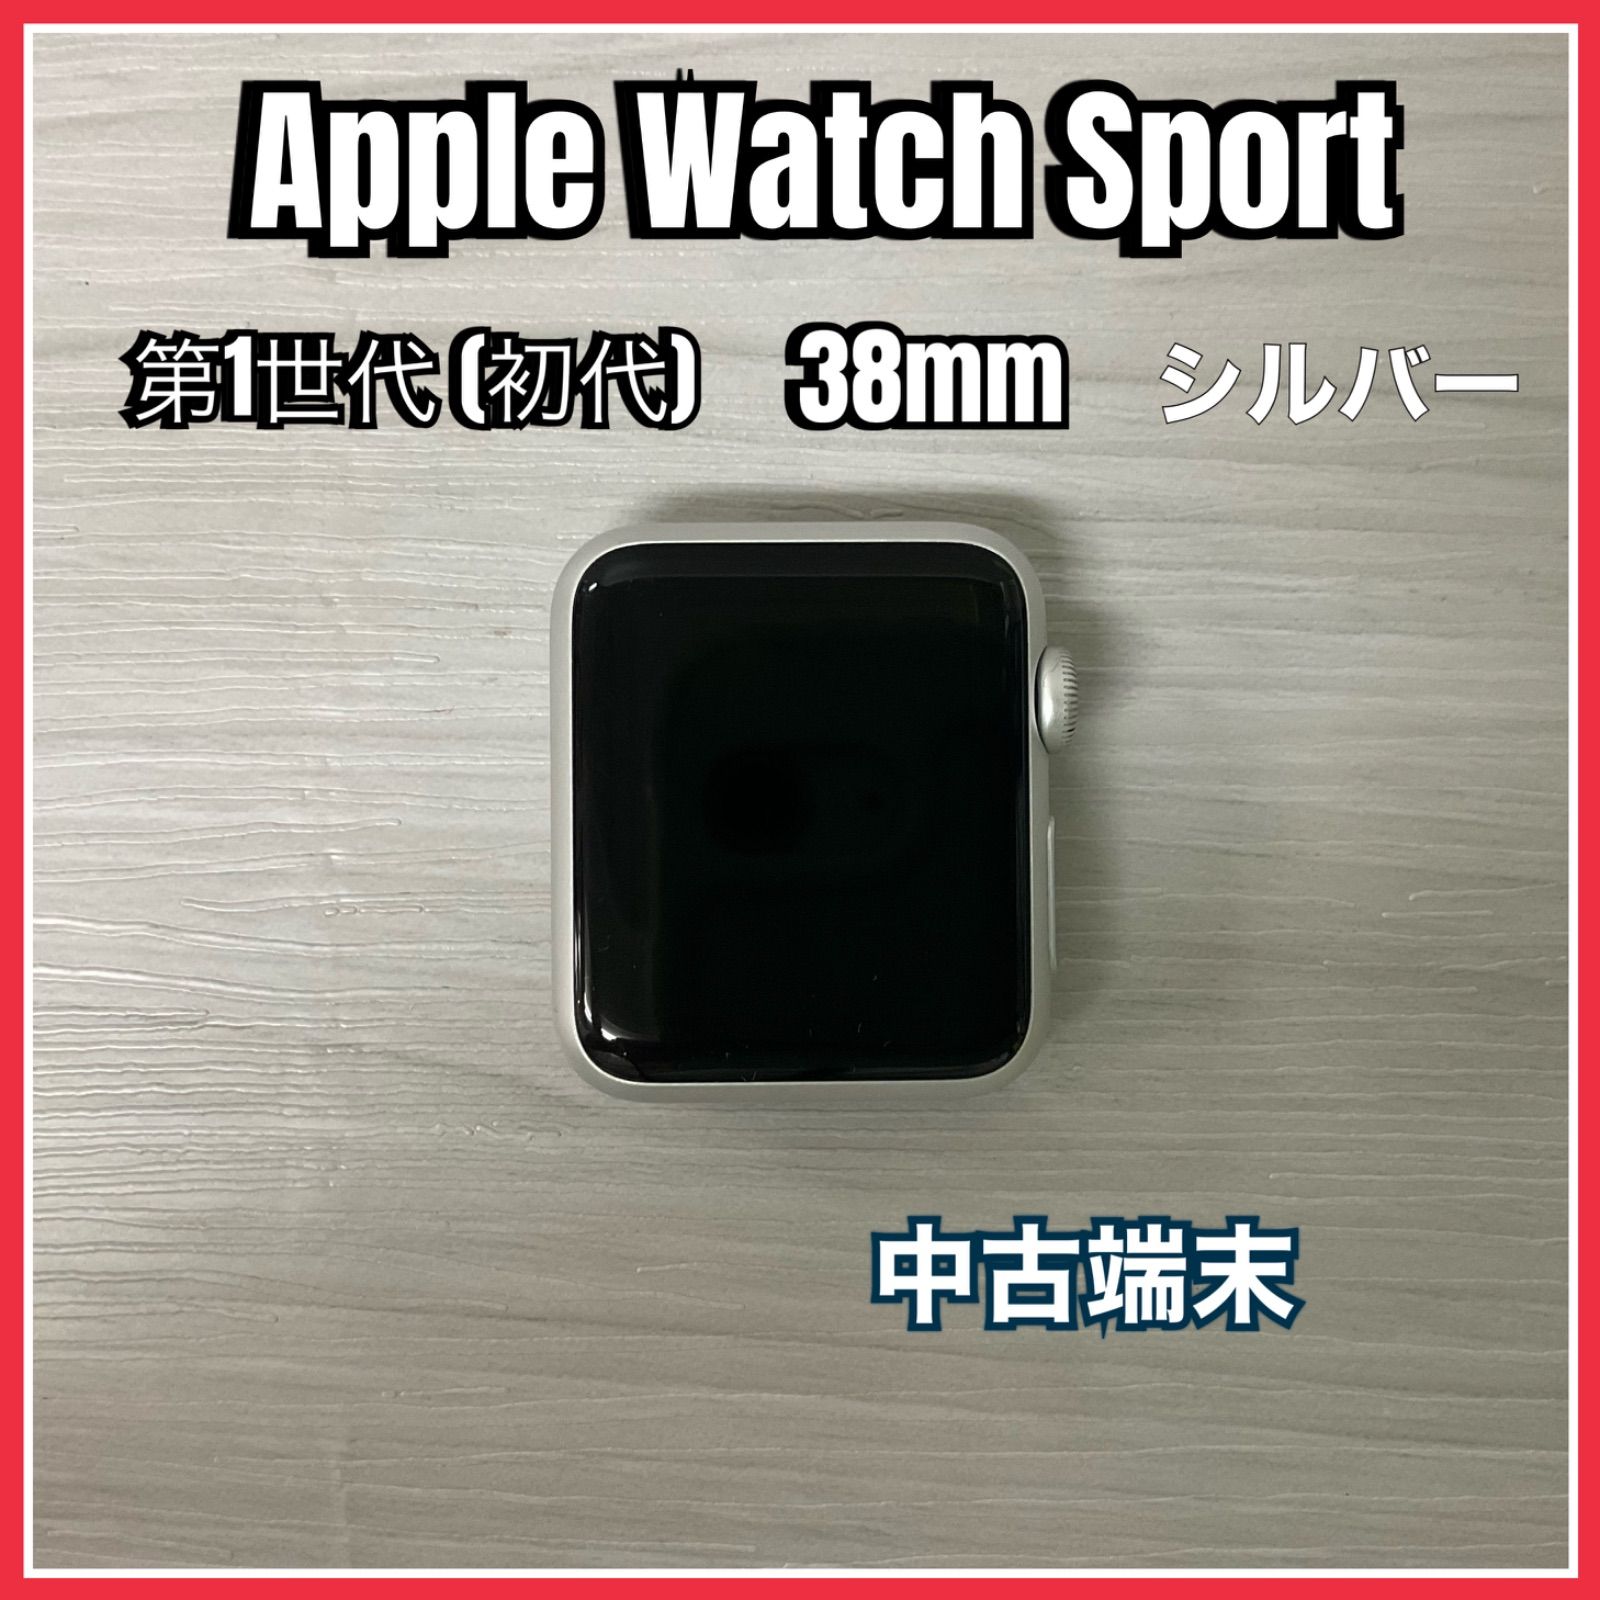 Apple Watch Sport 初代 (第1世代) 38mm <シルバー> 【中古】 - テレ